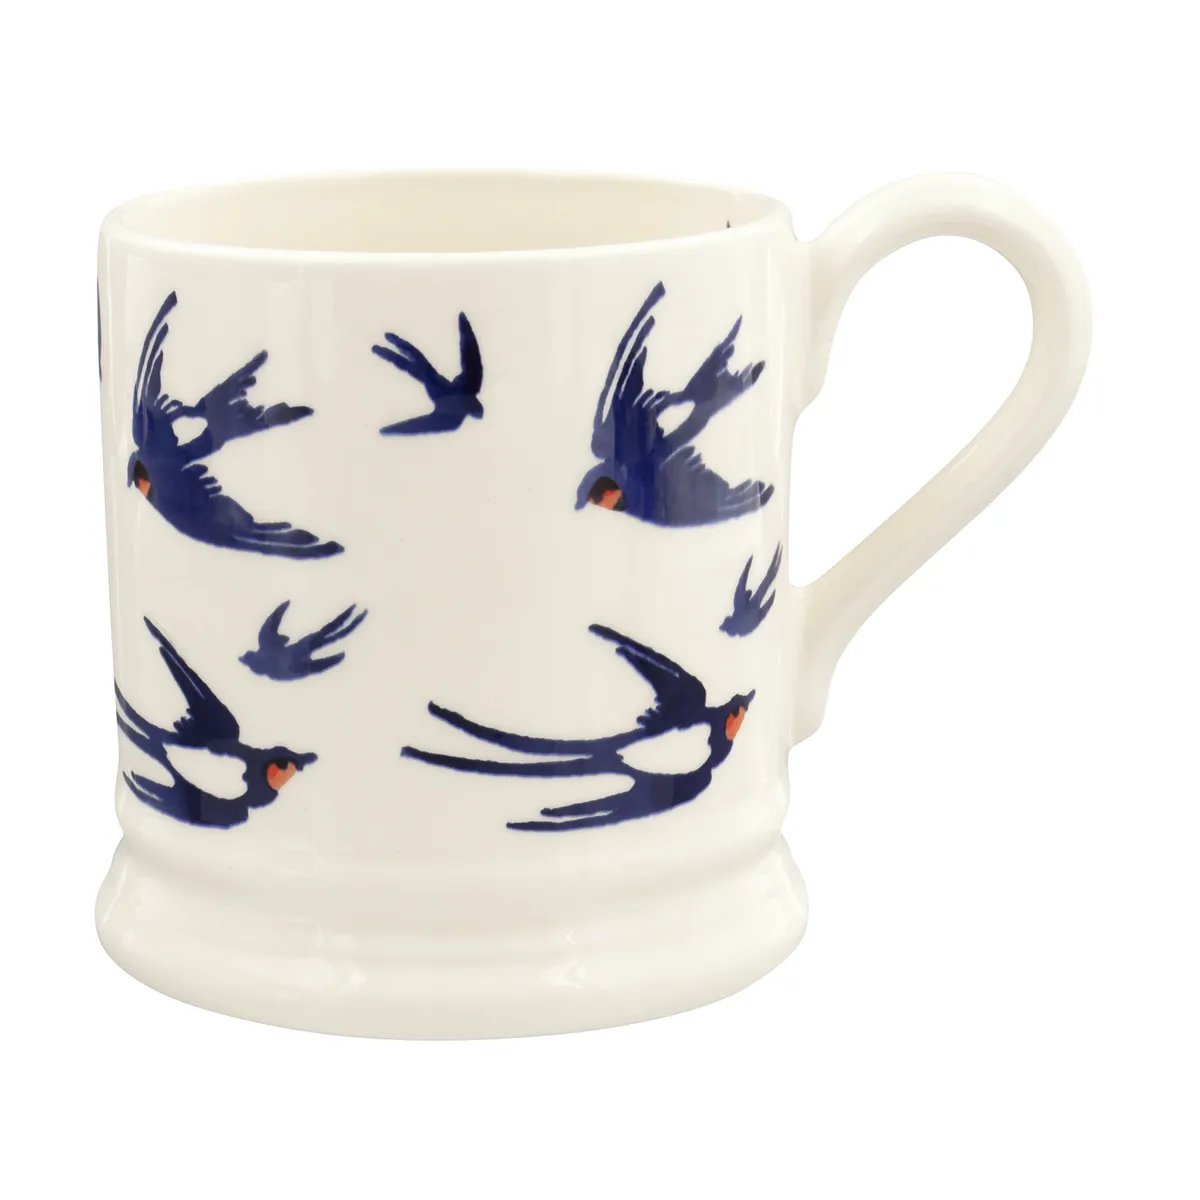 Emma Bridgewater Swallows mug